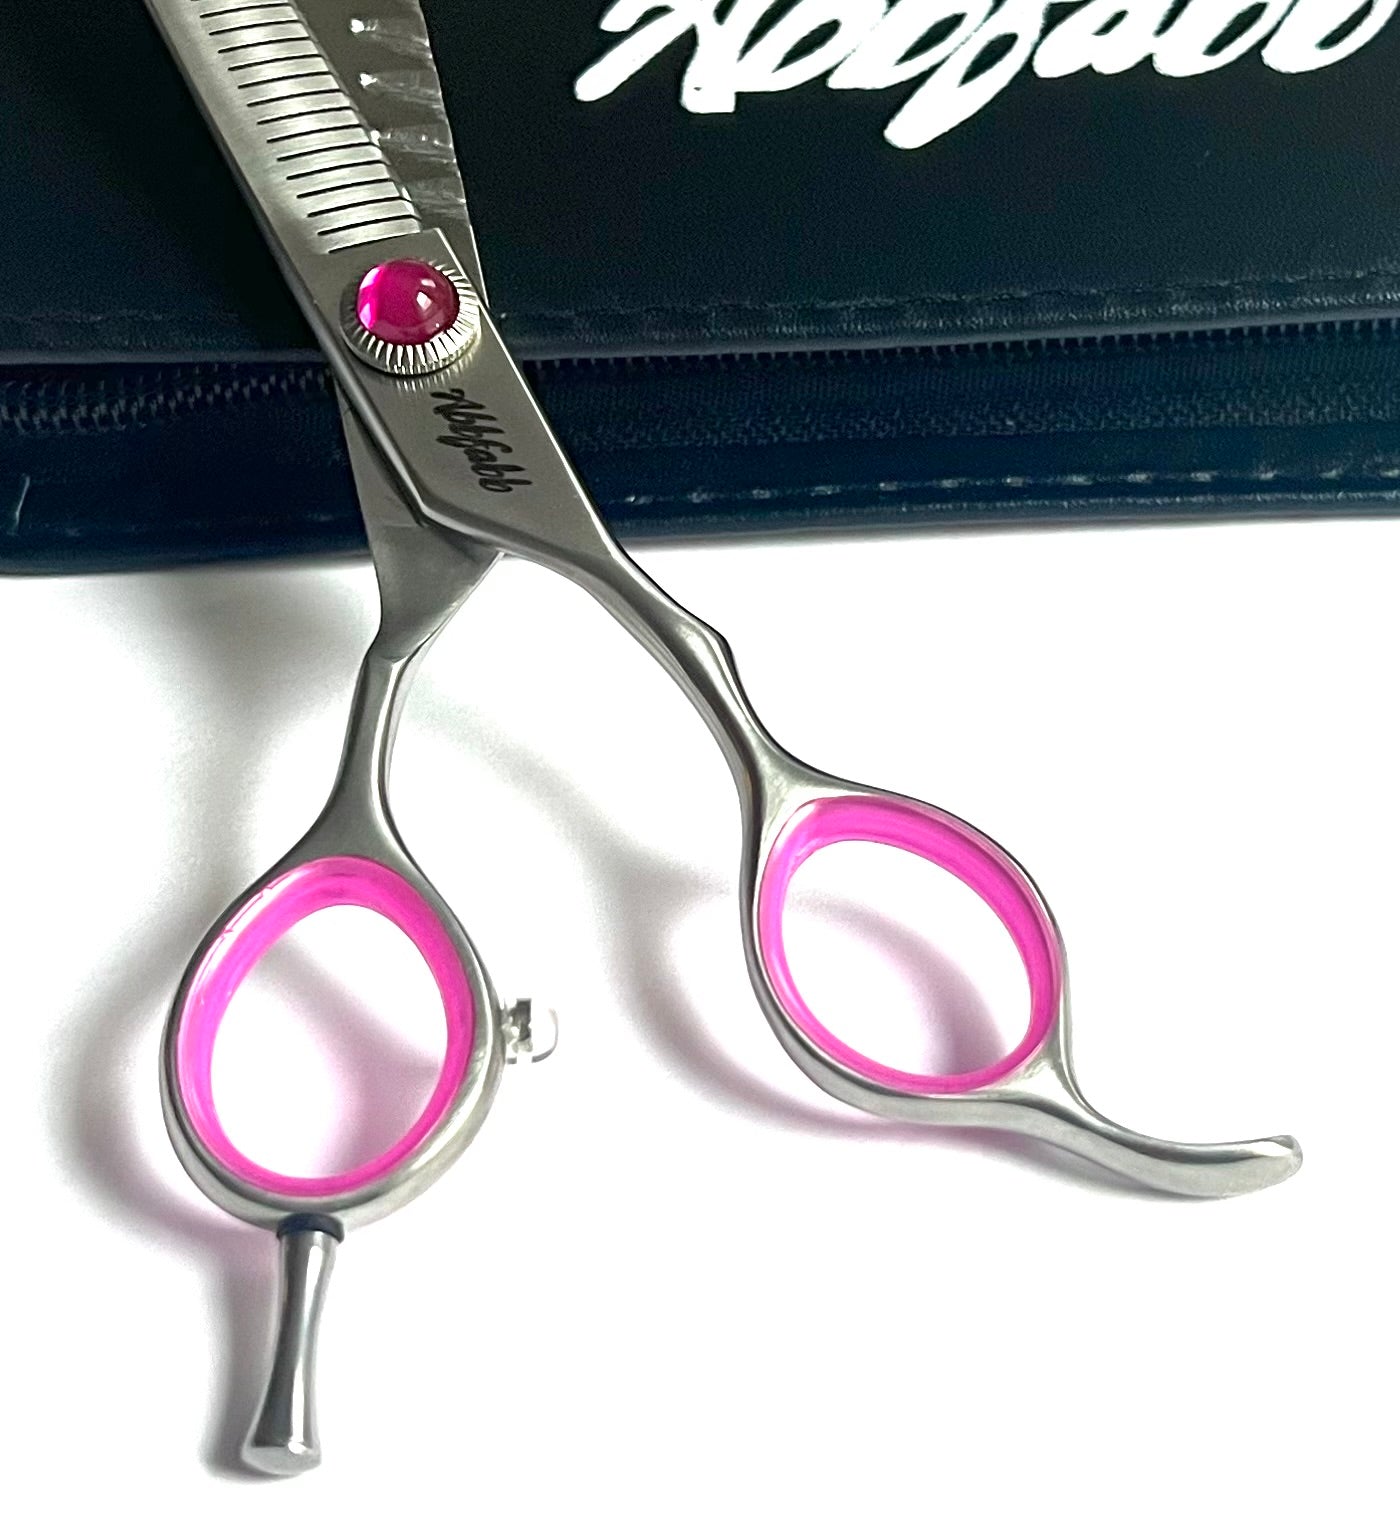 7" thinning grooming scissor-7" fluffer scissor-7" thinning shear for dog grooming-Abbfabb